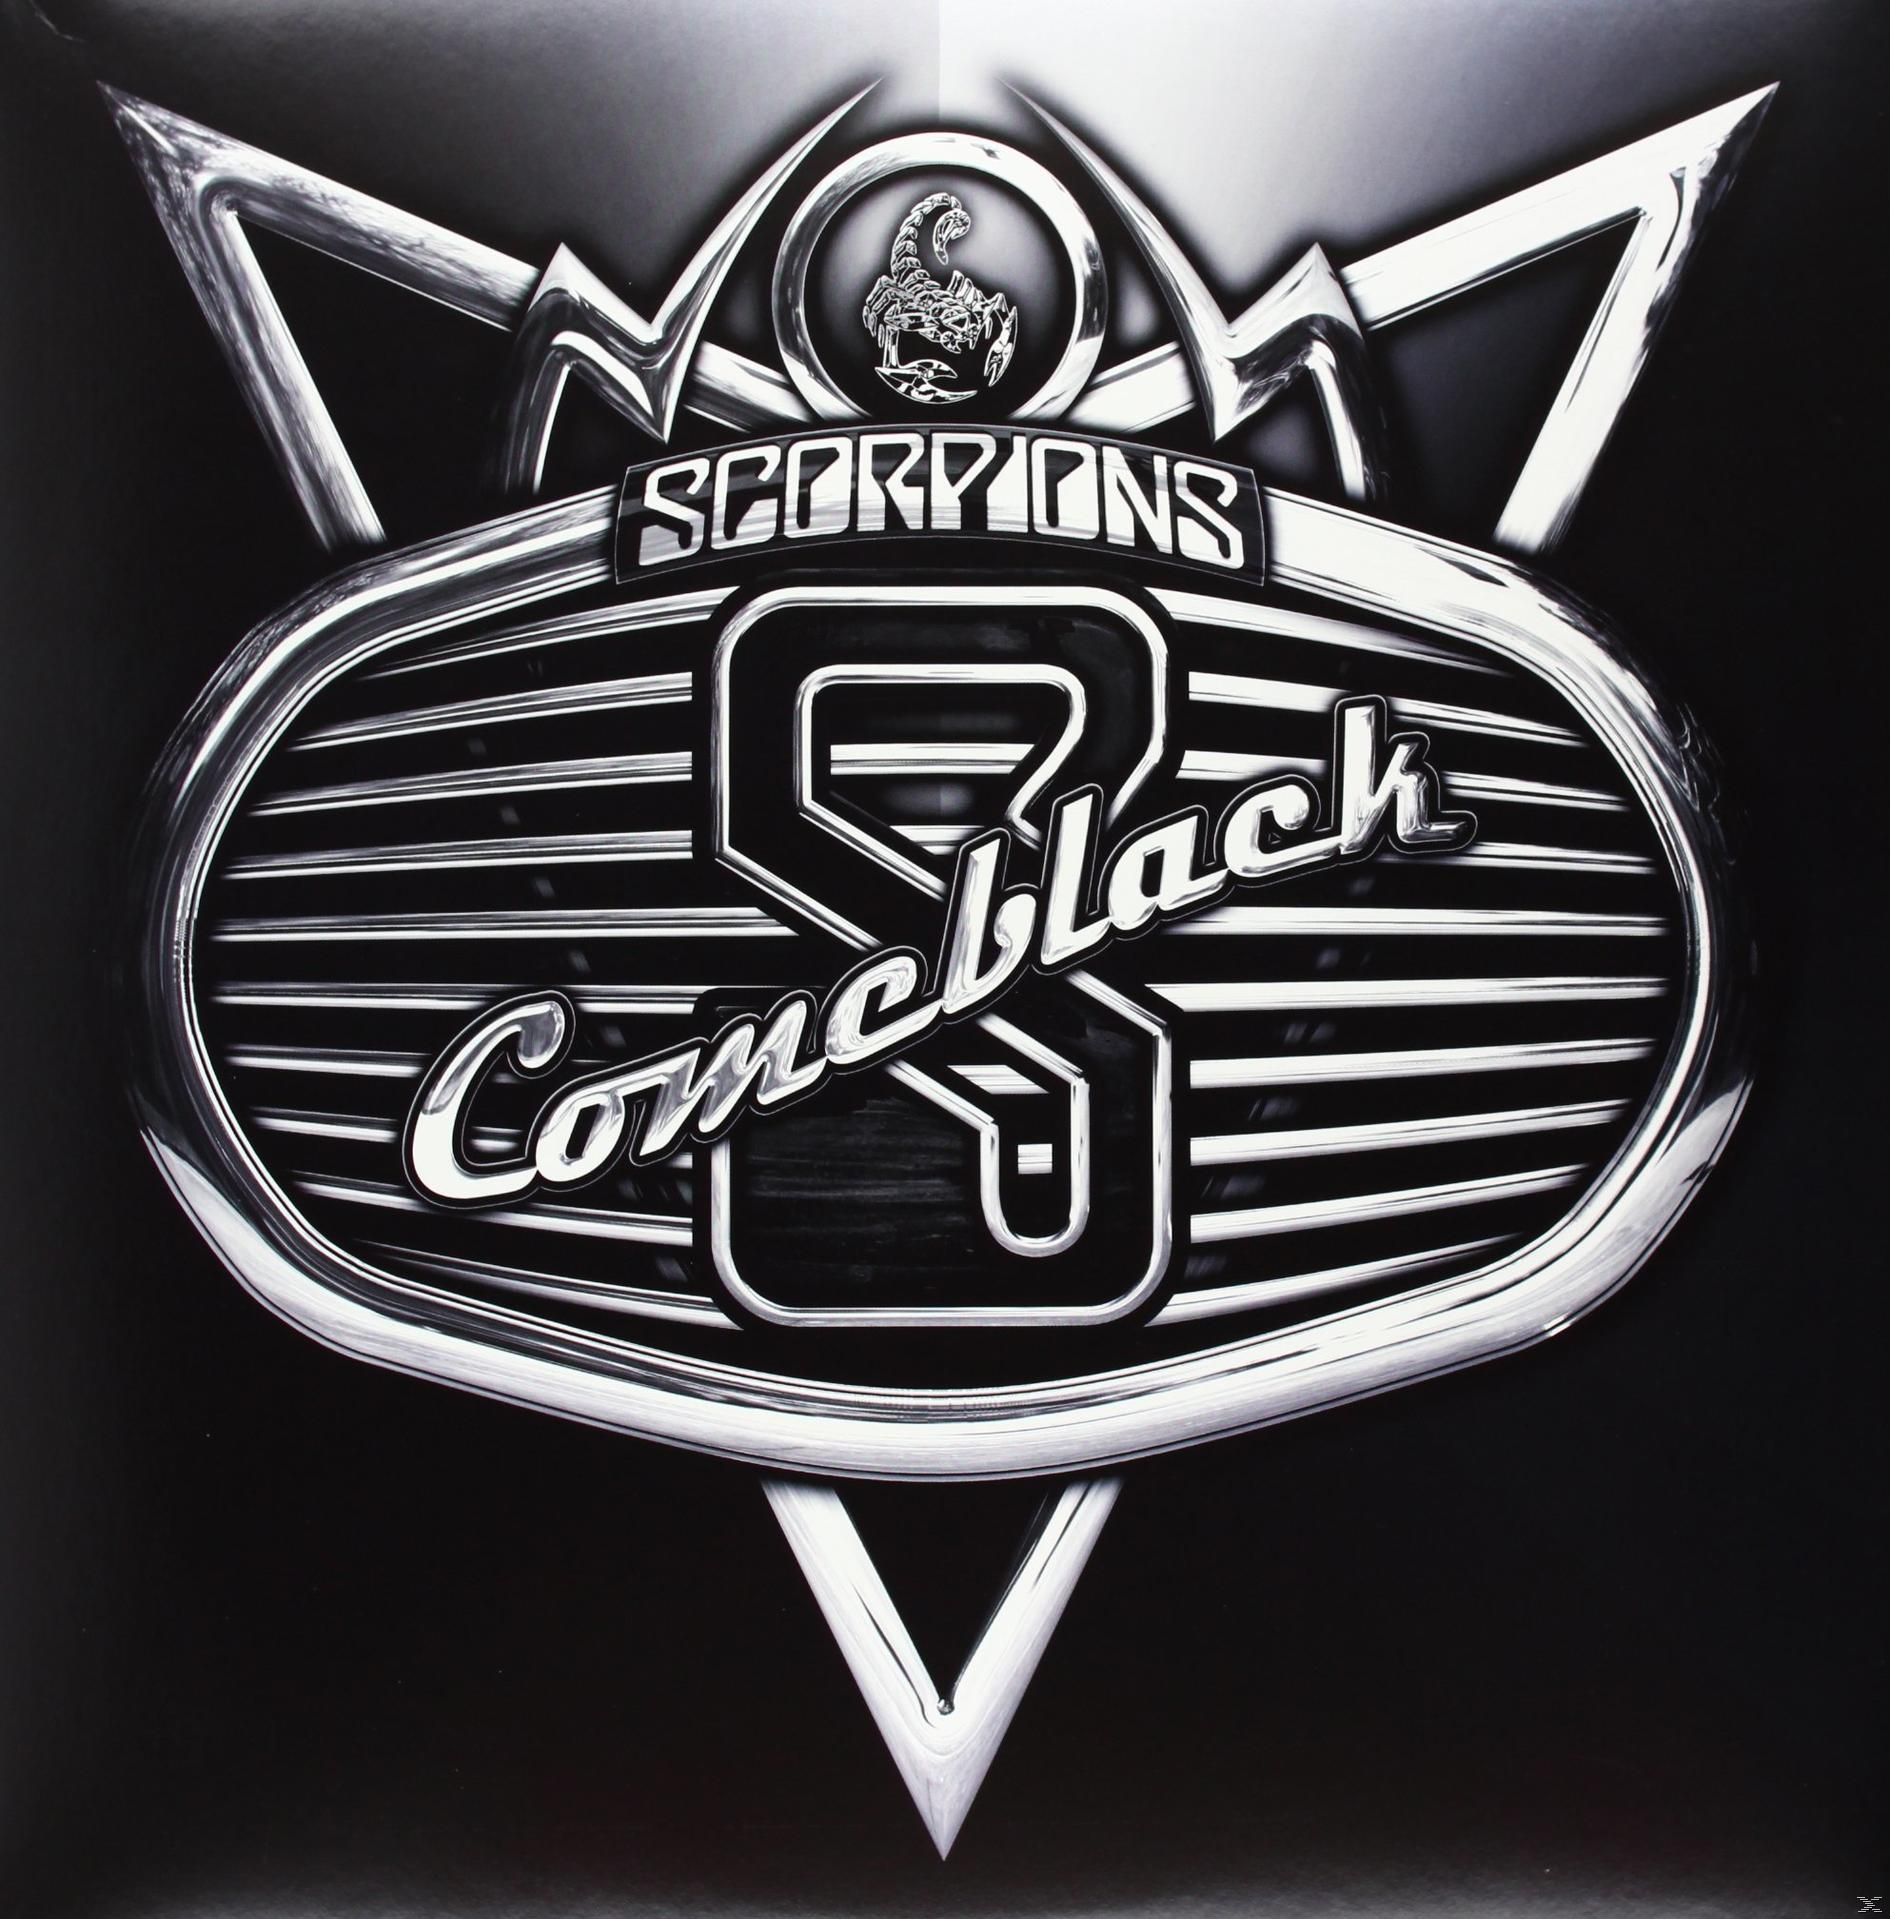 Scorpions - - Comeblack (Vinyl)